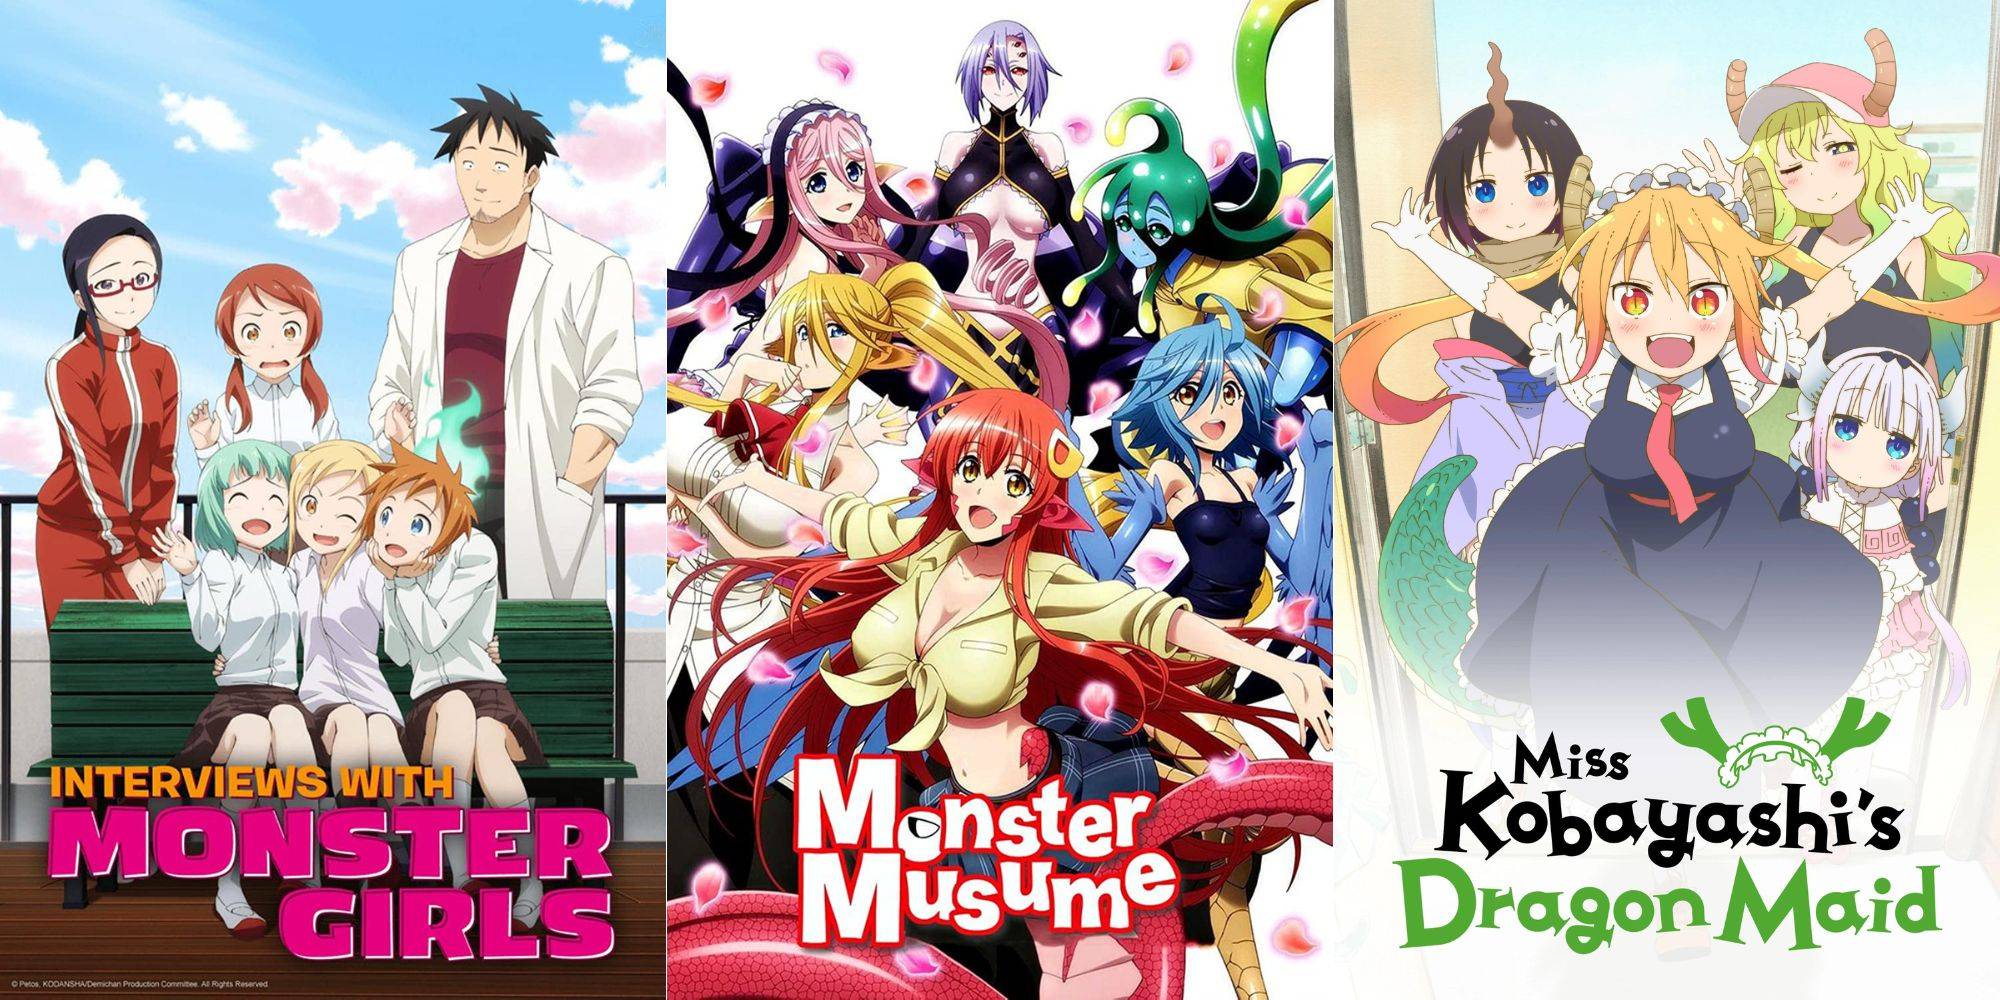 Animes like monster musume